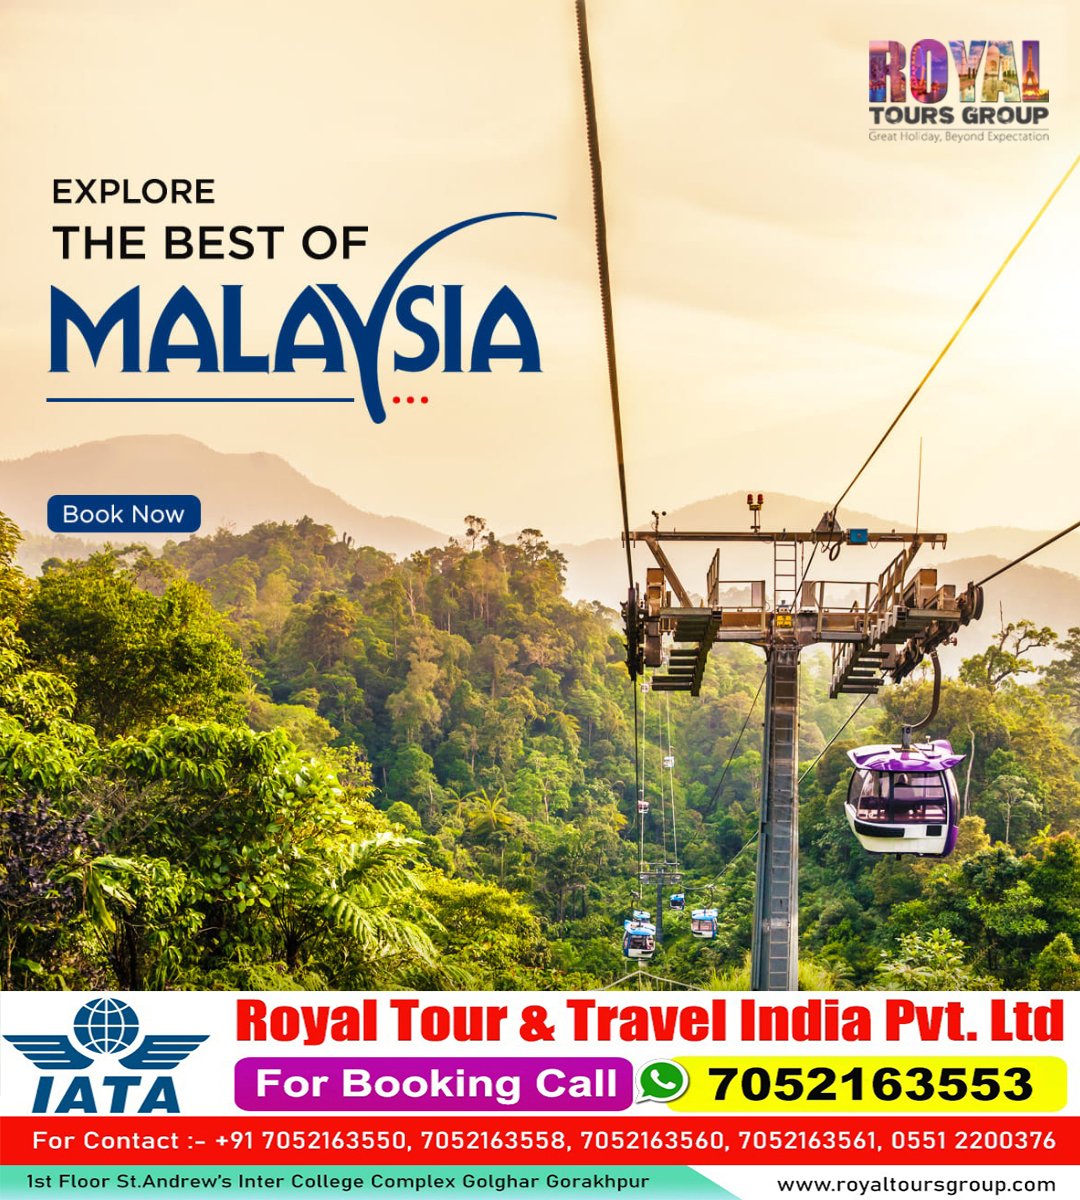 For Booking Call :- 070521 63558
info@royaltoursgroup.com
---------------------------------------

#travelagent #royalholidaysgorakhpur #Gorakhpur #kerala #keralatourism #travel #everyone #airticket #flight #agency #taxi #holiday #holidaypackages #travel #malaysia #malaysianfood